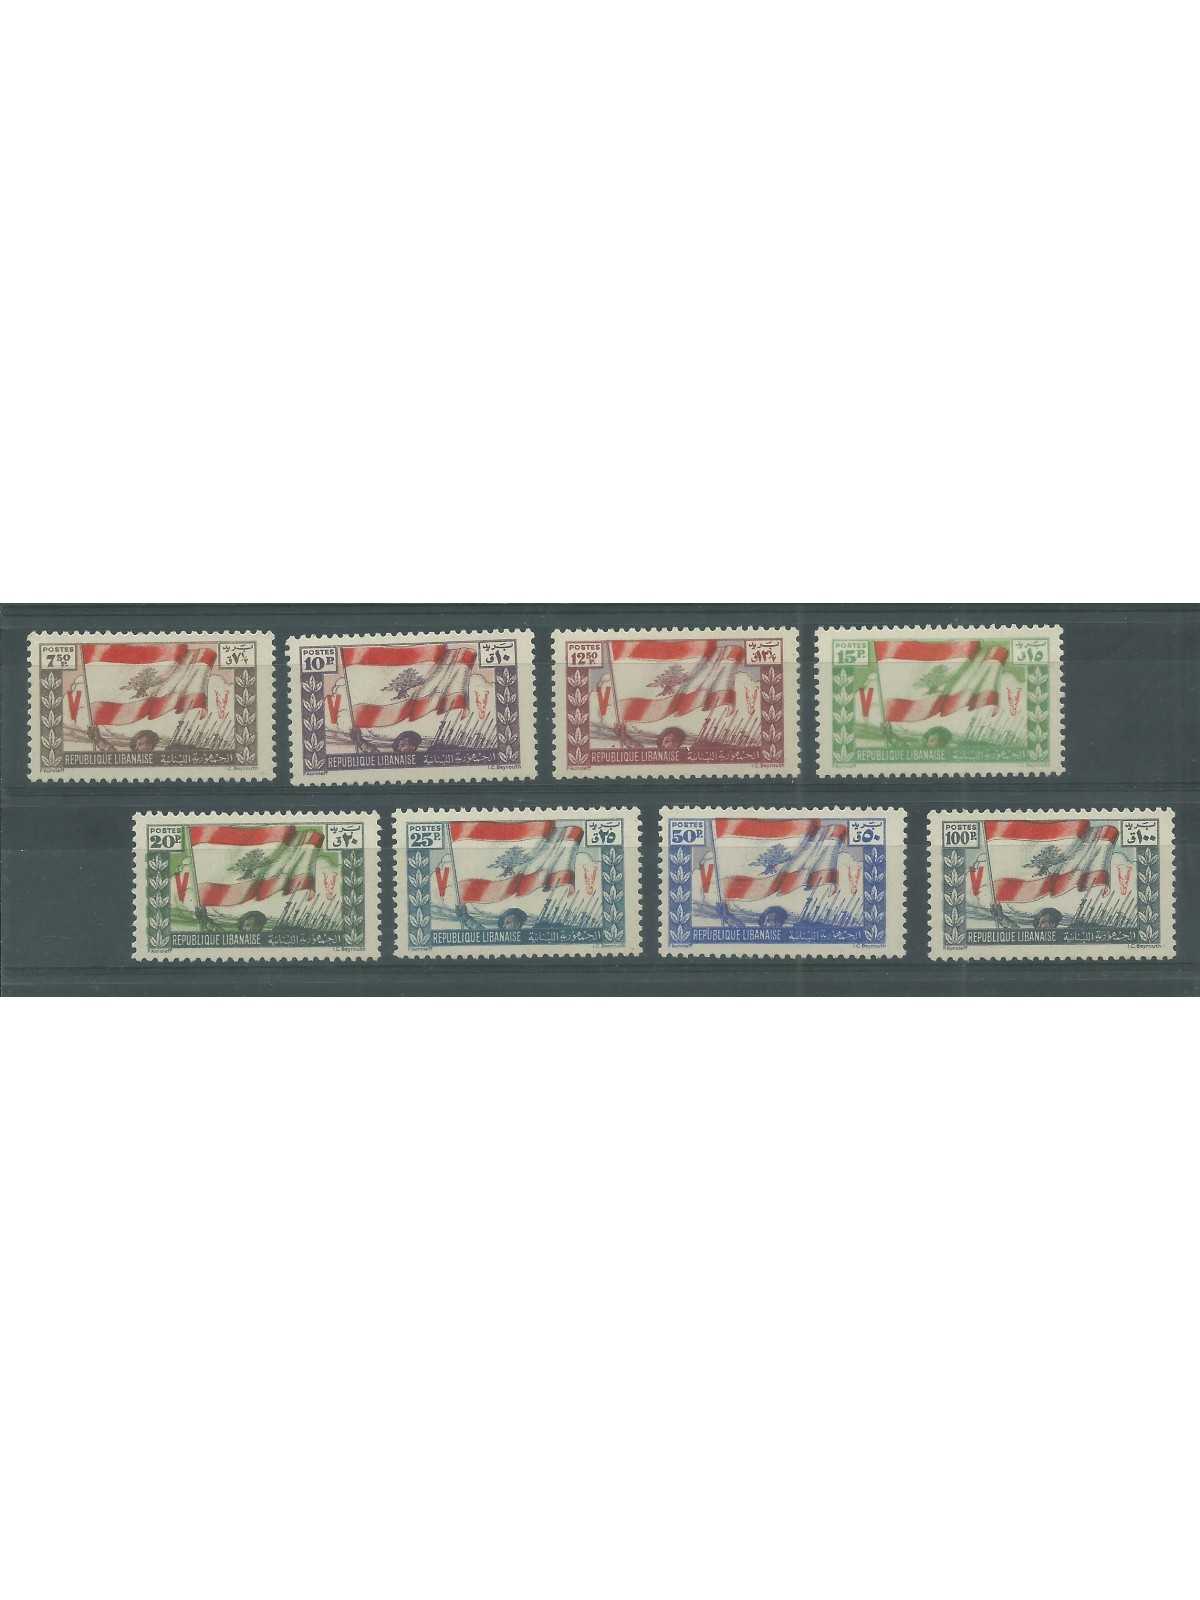 1946 LIBANO ANNIVERSARIO VITTORIA 10 valori MNH MF50821